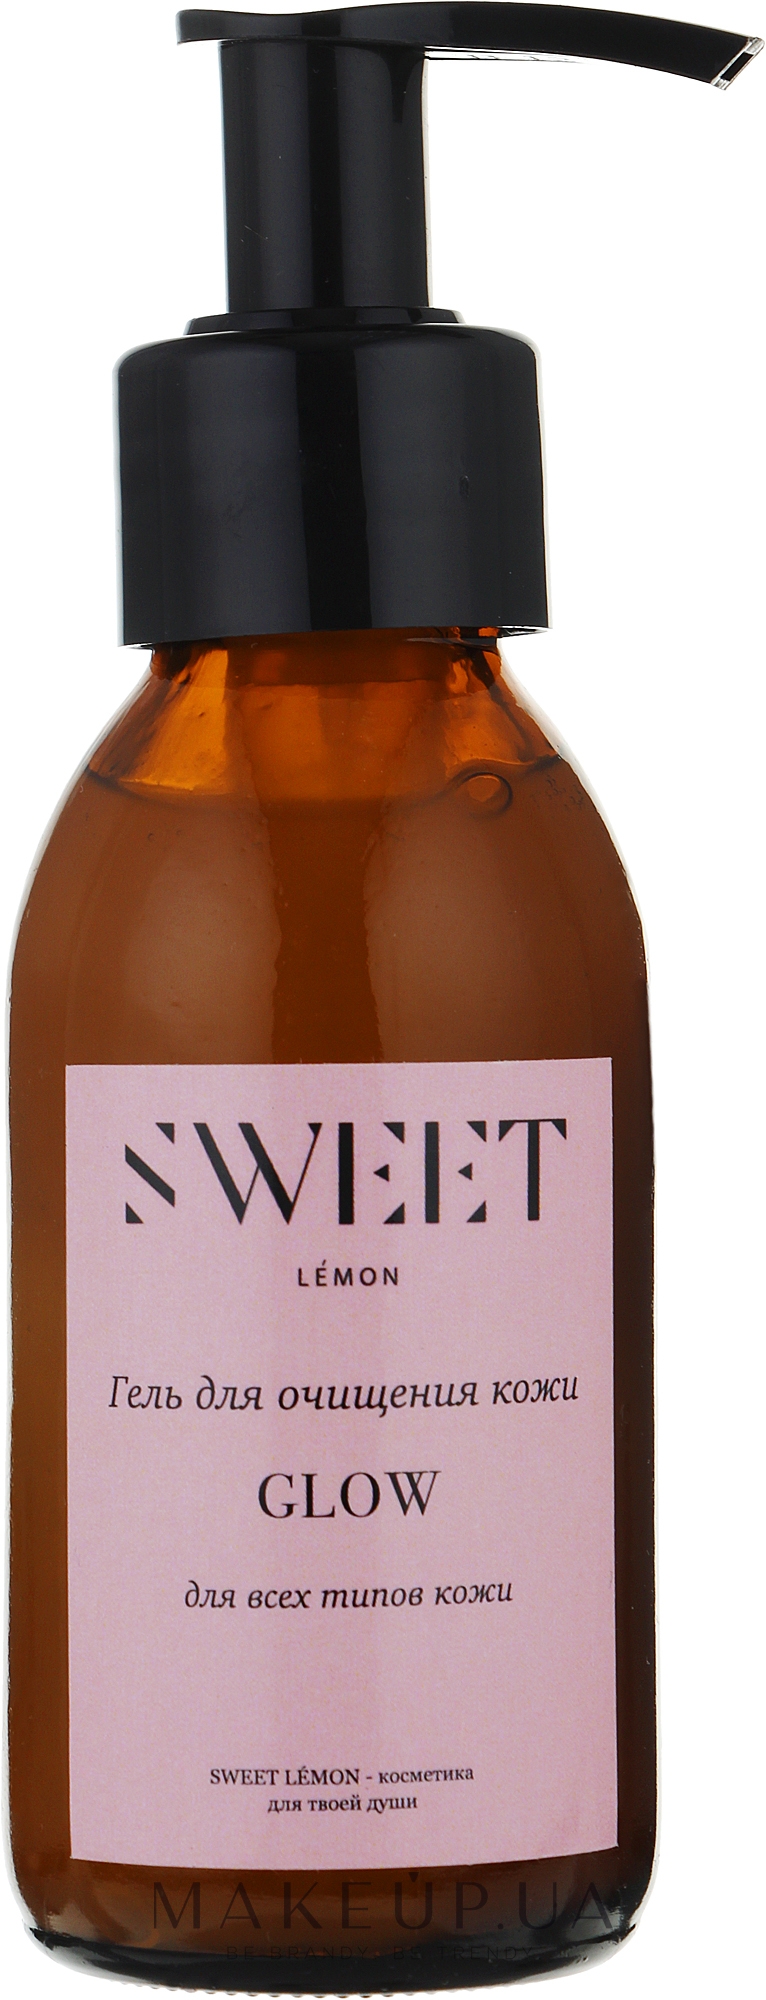 Гель для очищения кожи "Glow" - Sweet Lemon Cleansing Gel — фото 100ml